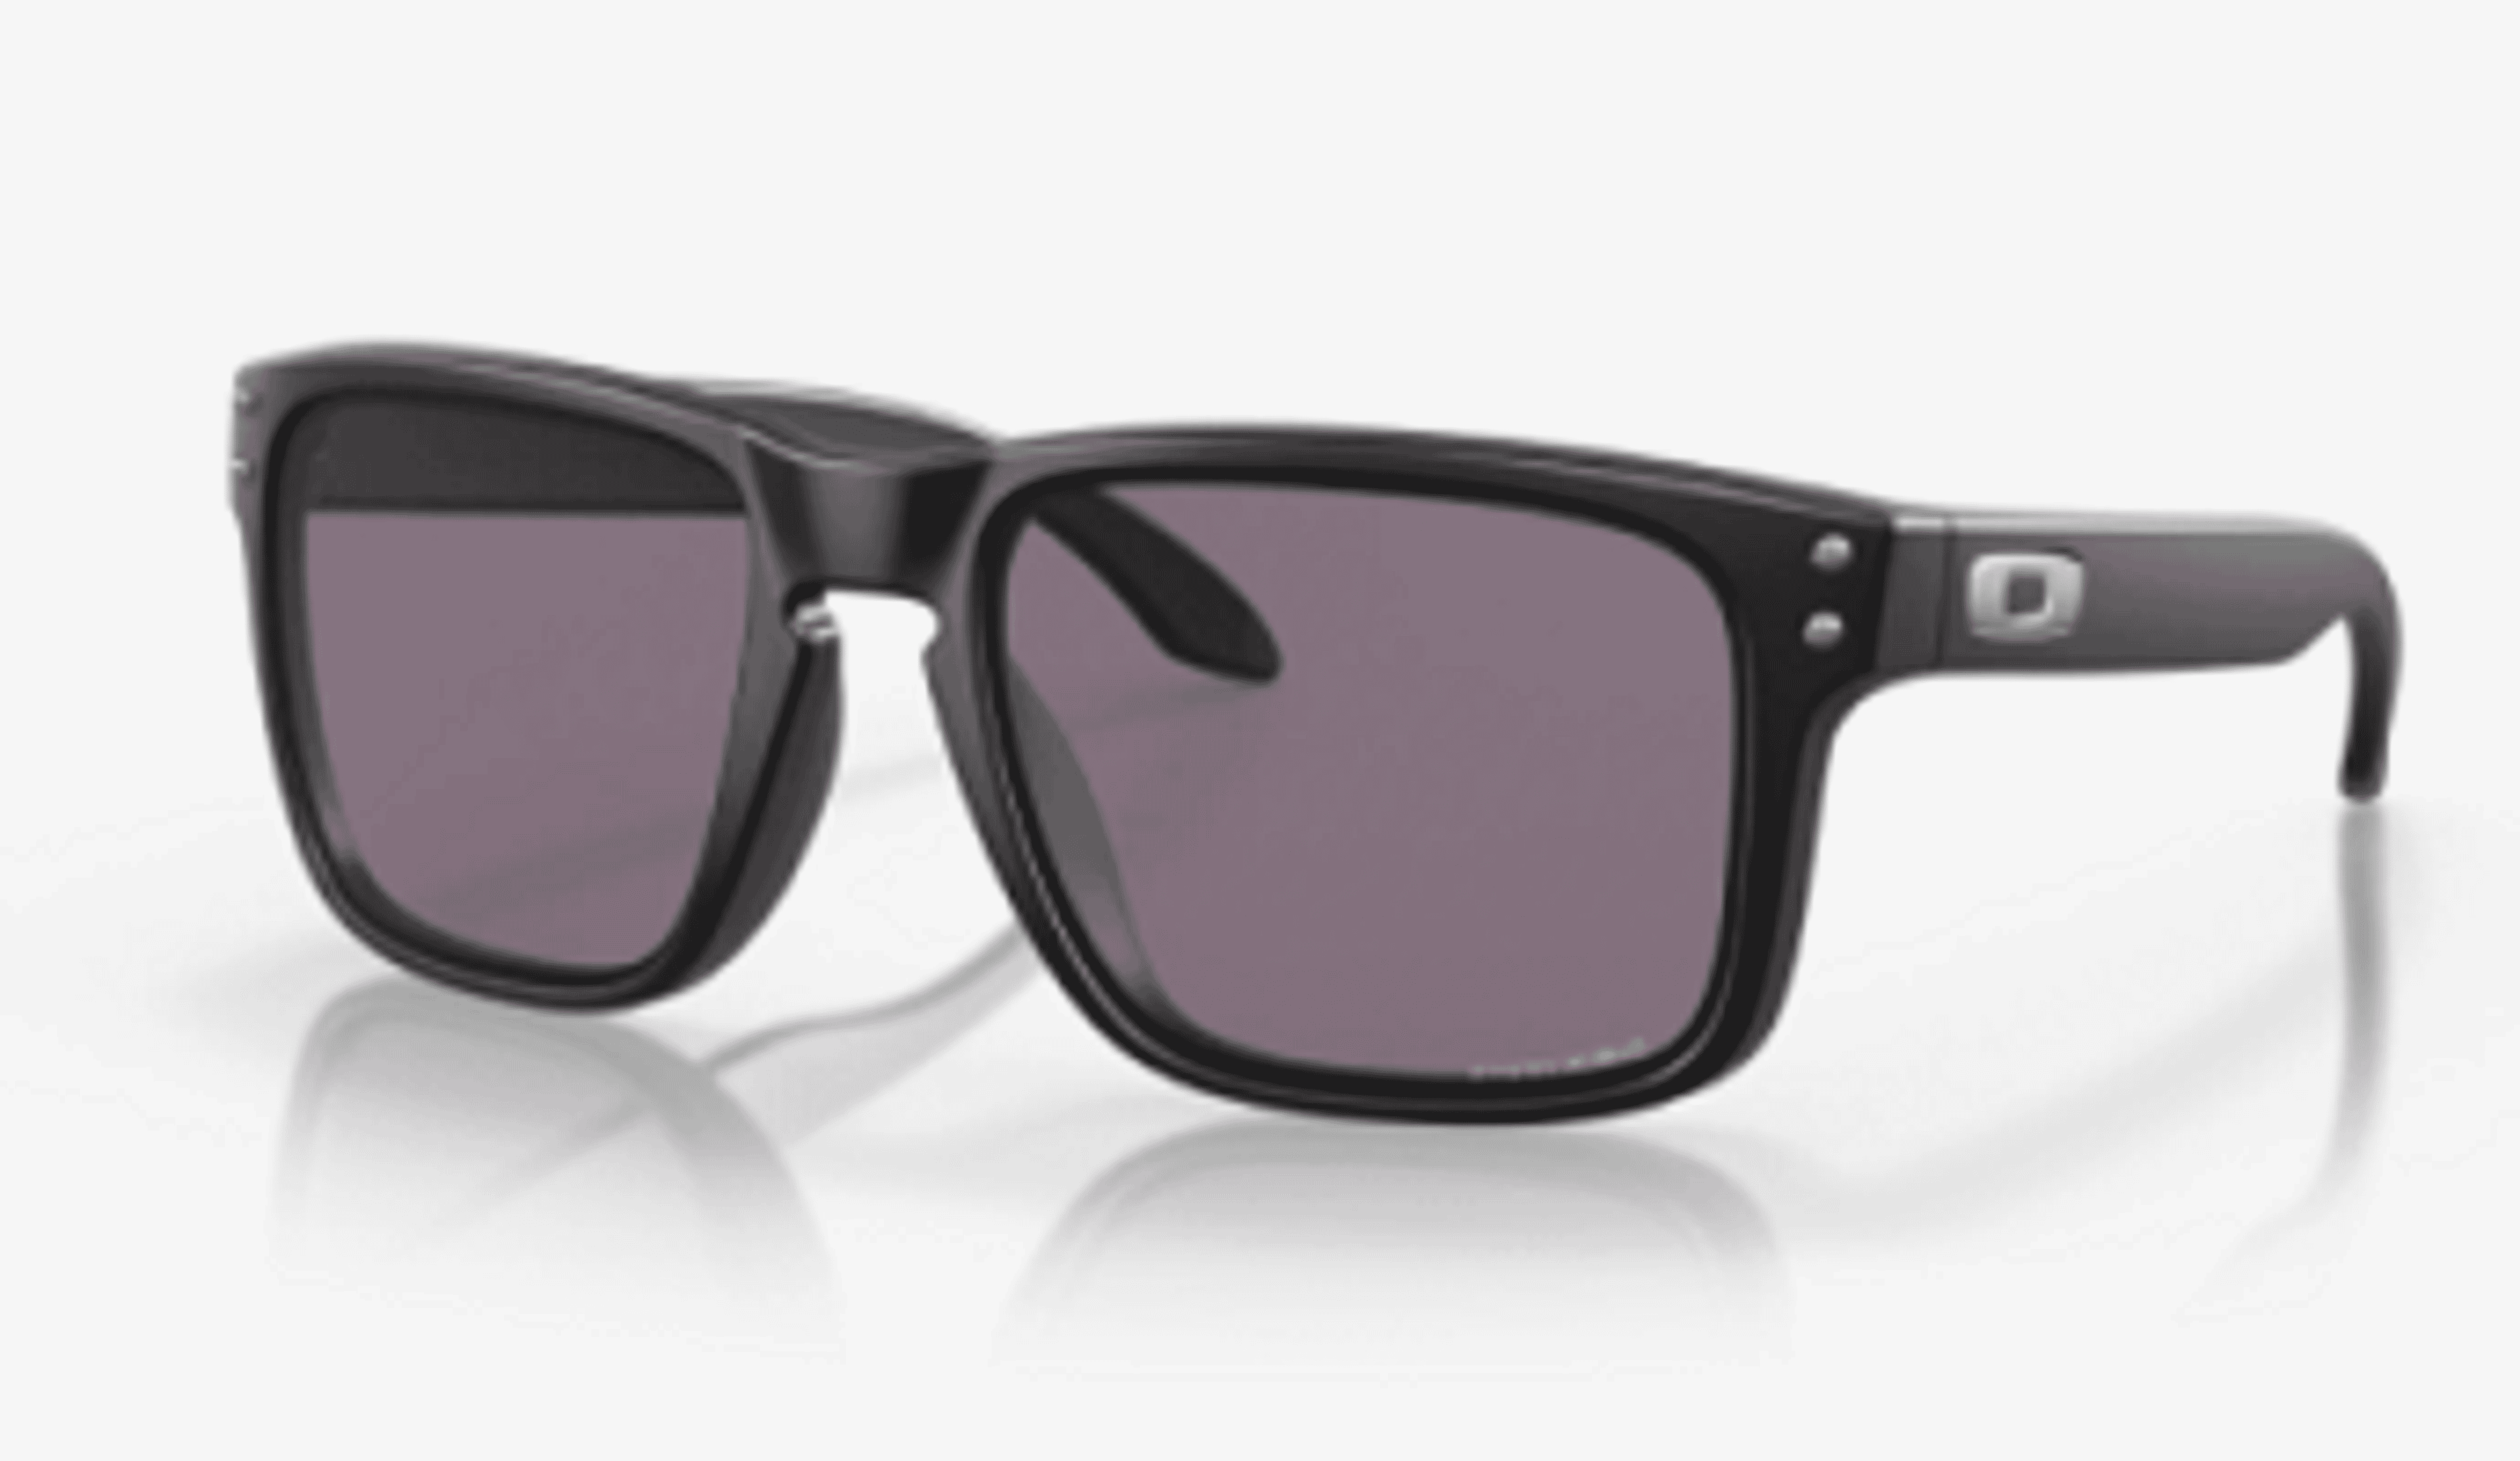  A pair of Oakley Holybrook sunglasses 